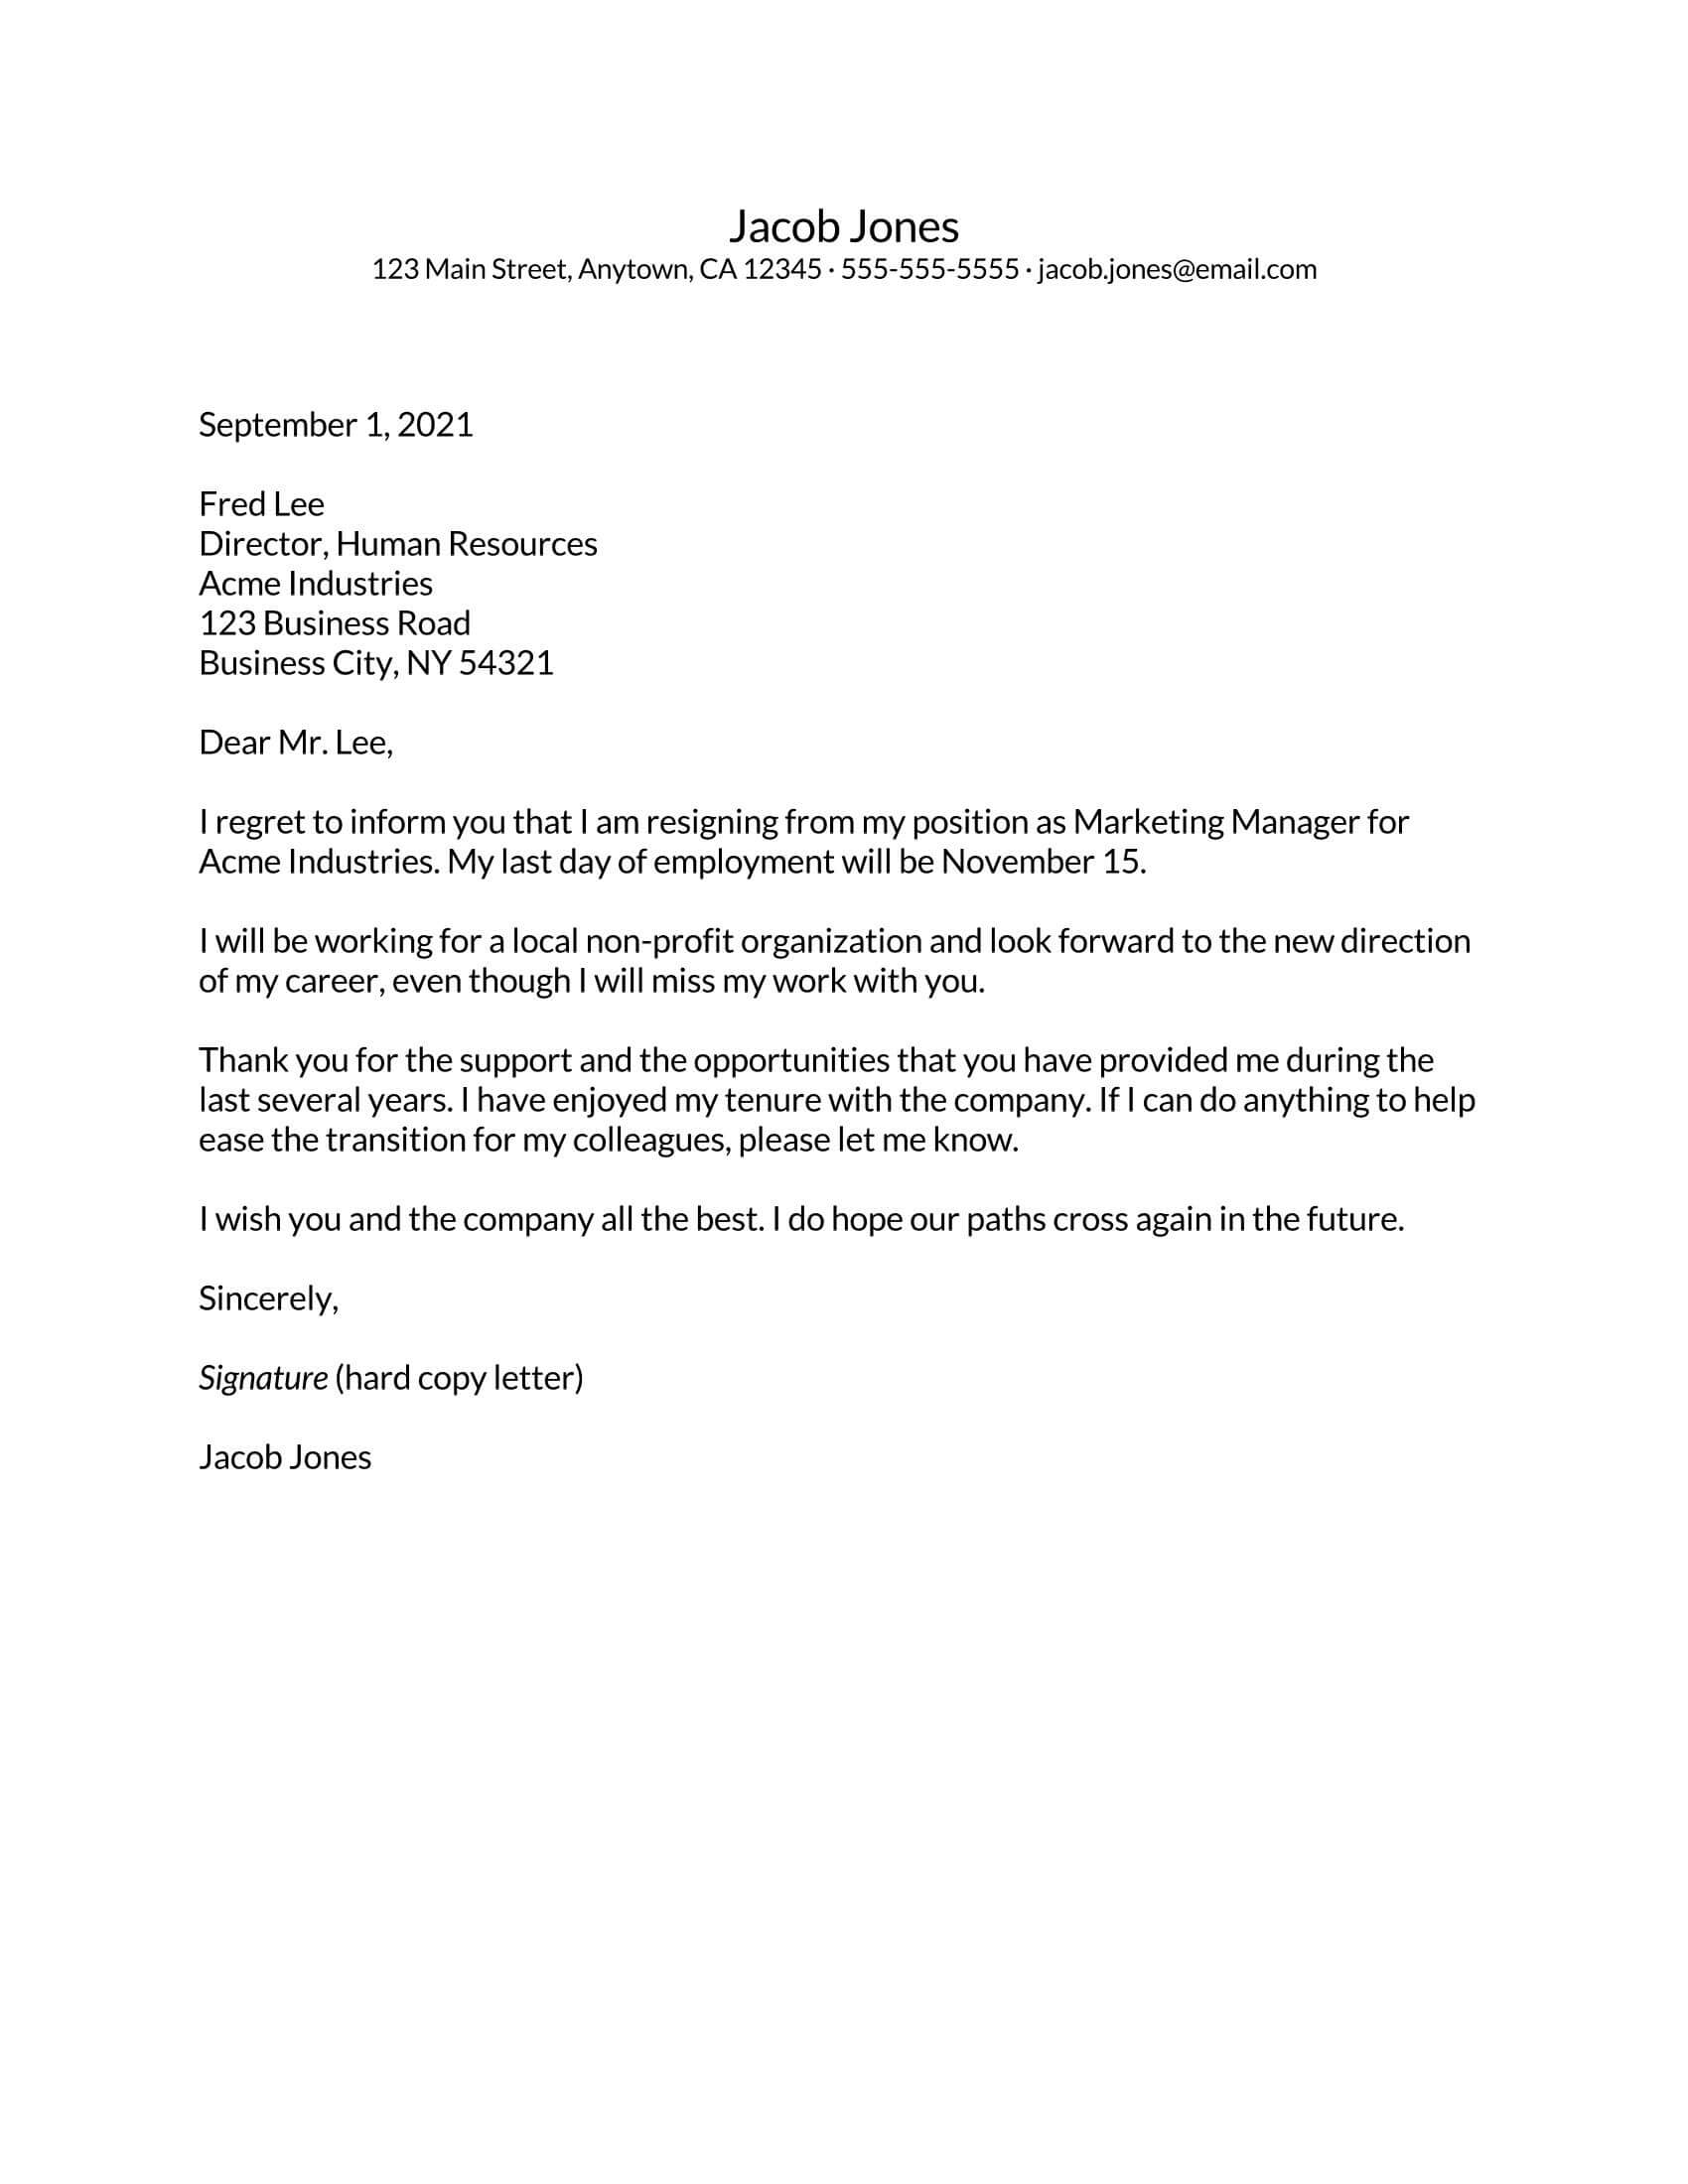 Career Change Letter of Resignation Example